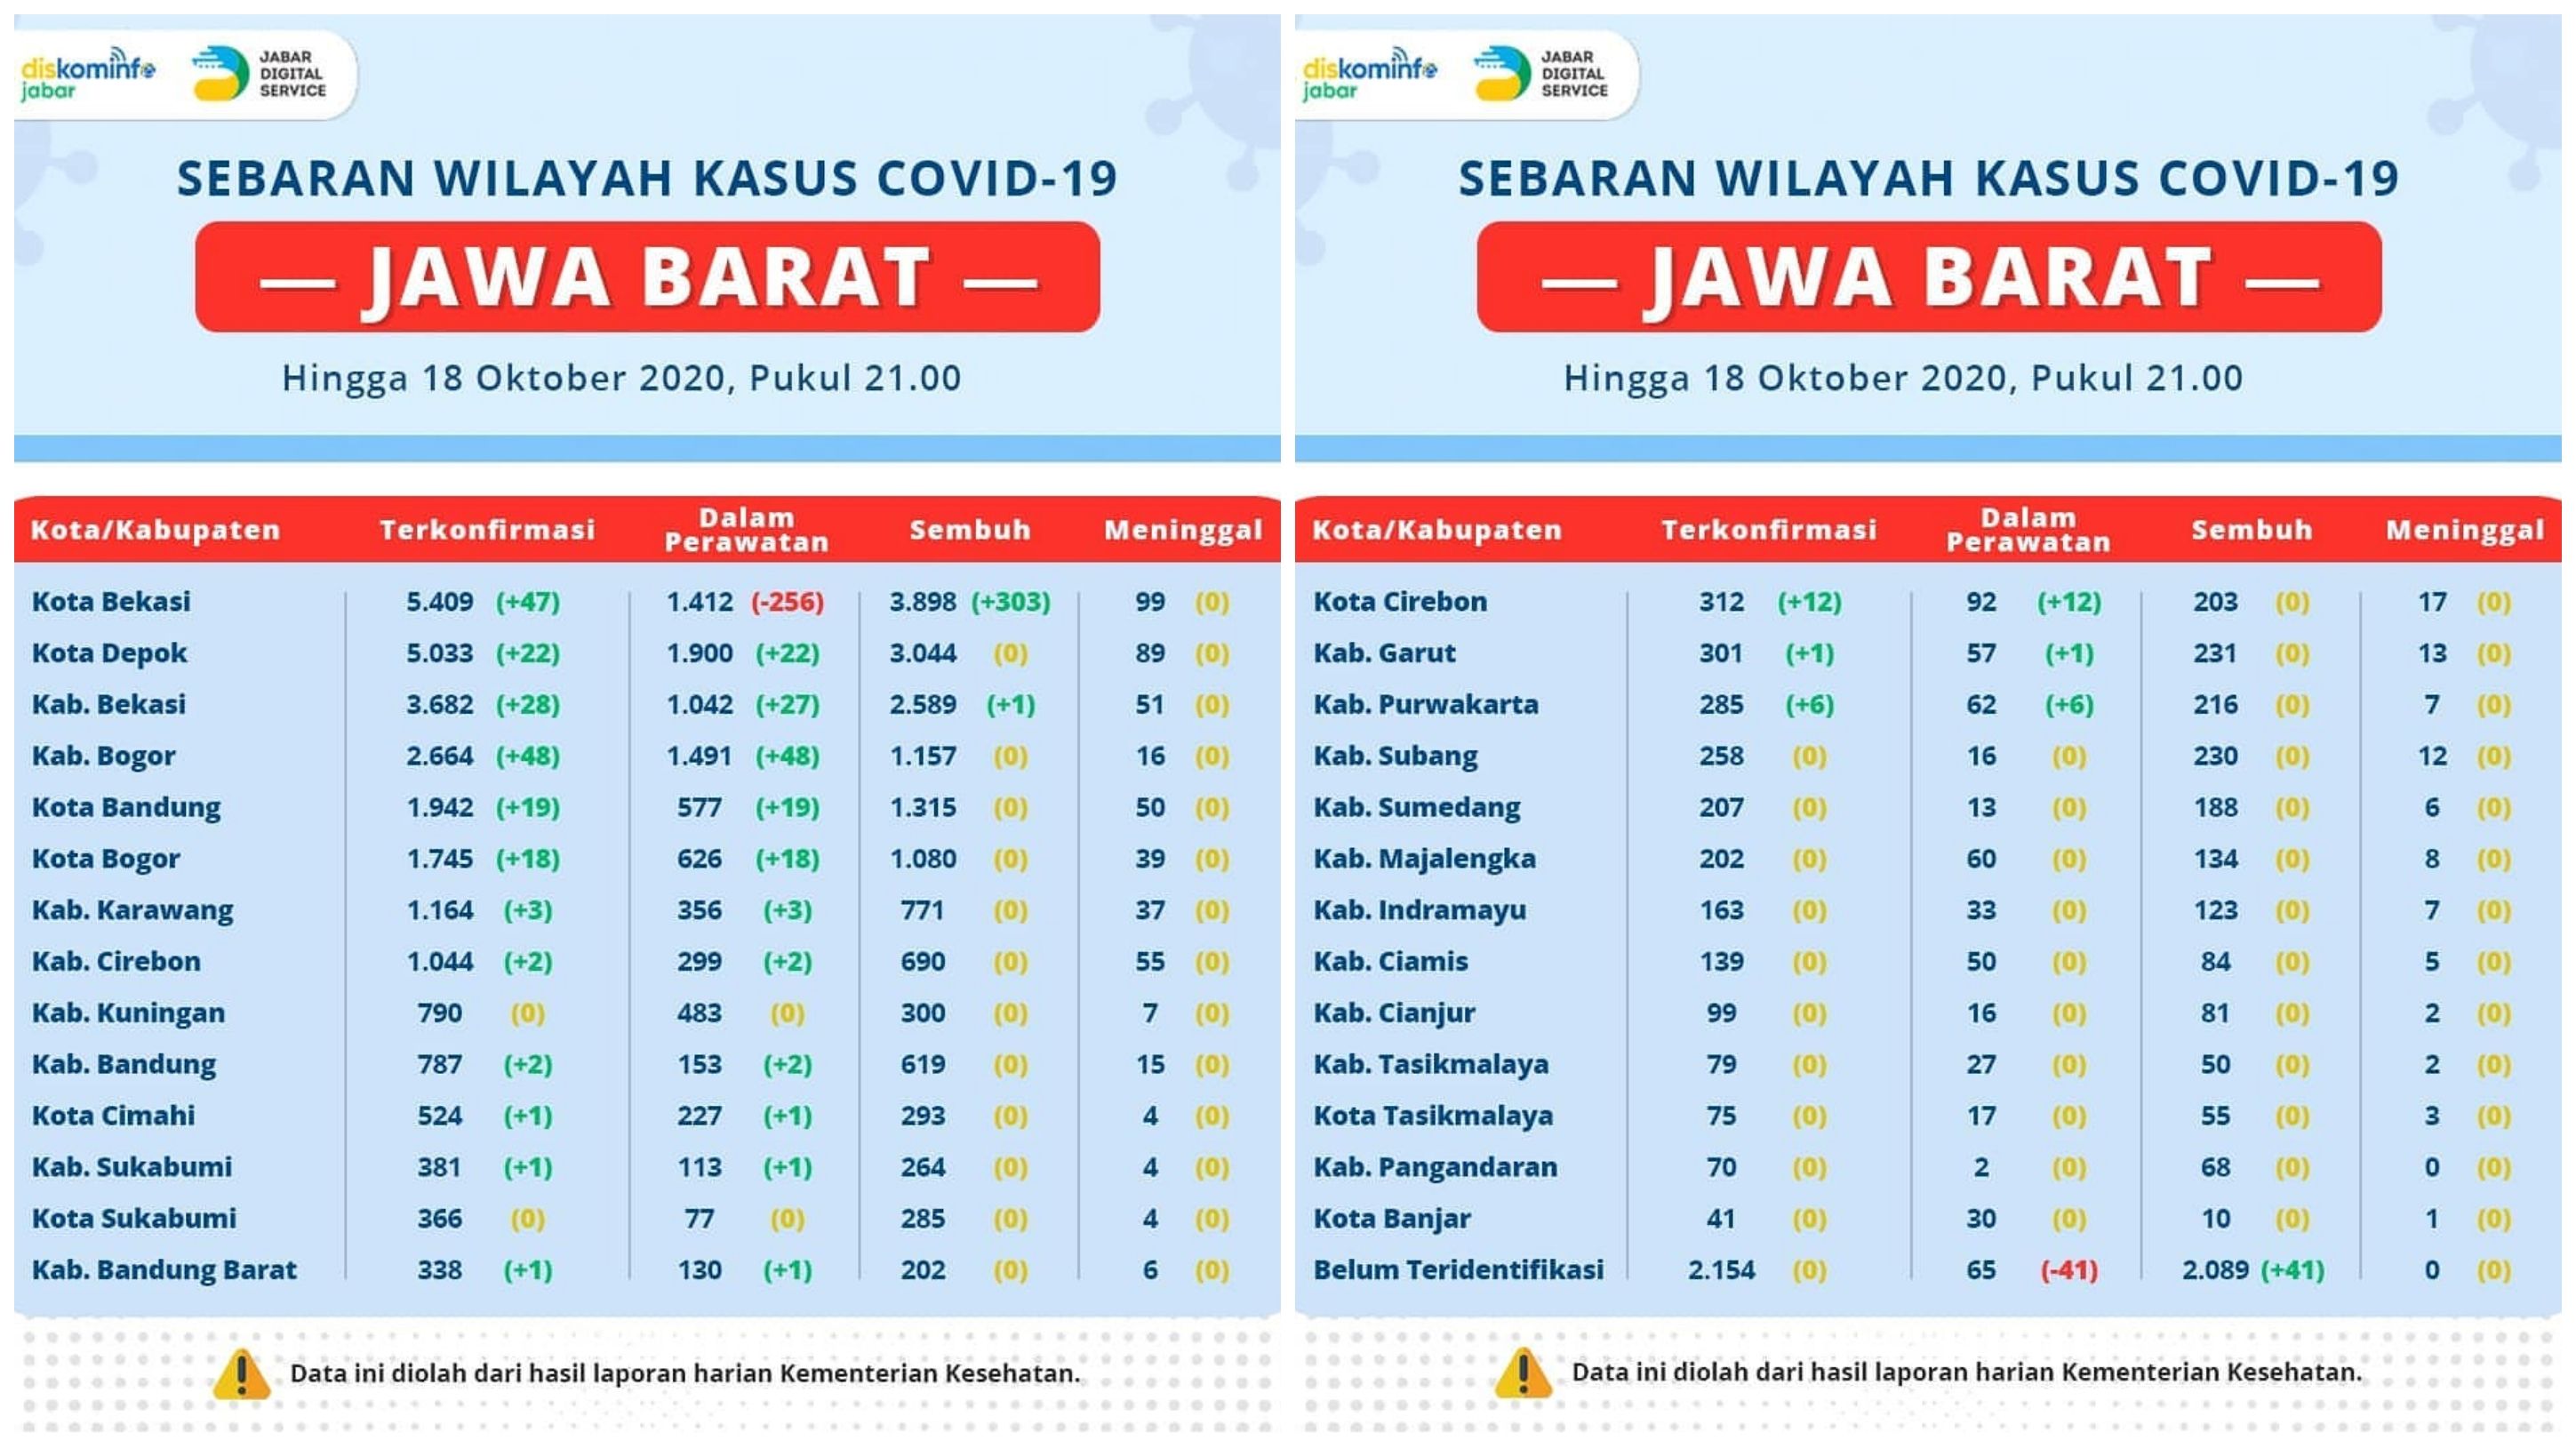 Update Data COVID-19 di Jawa Barat 18 Oktober 2020 Pukul 21.00